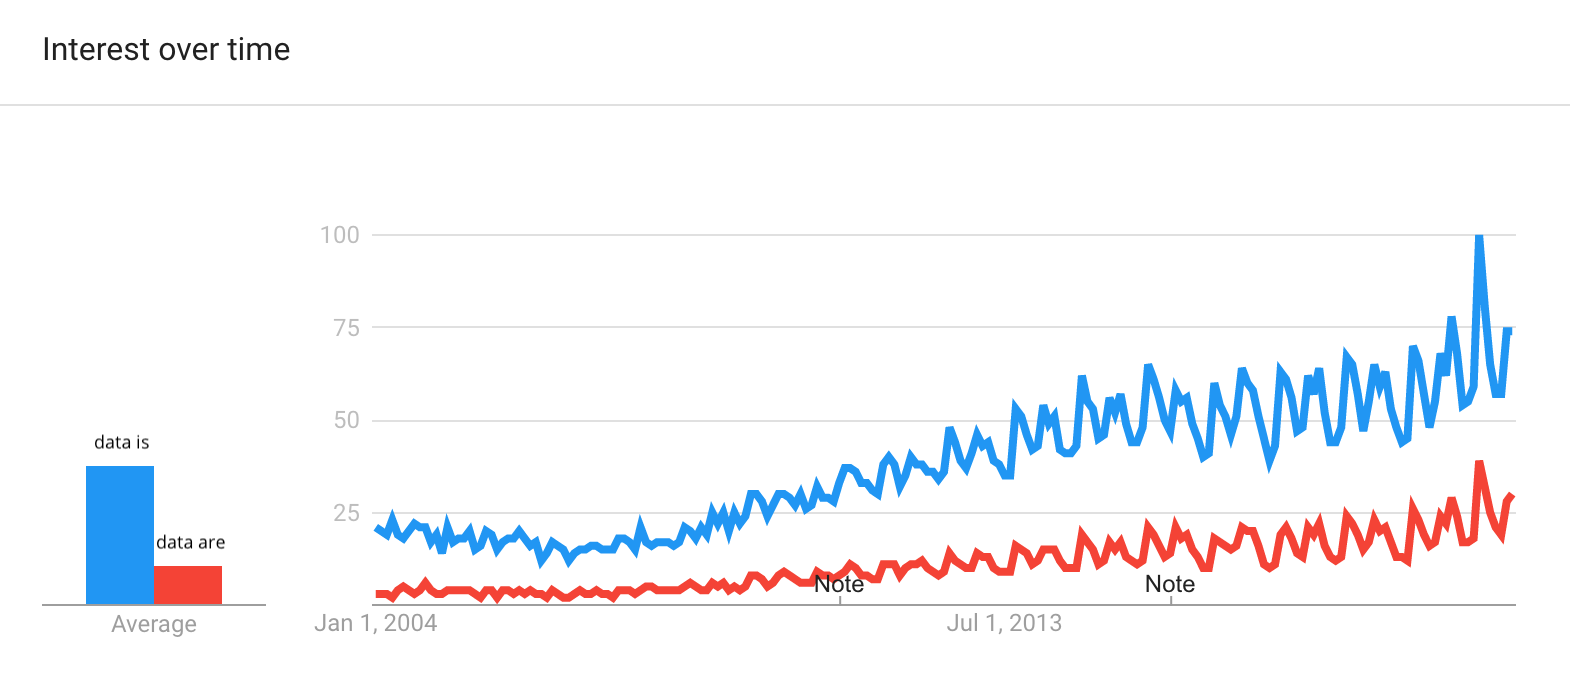 Data is VS data are, Google trends